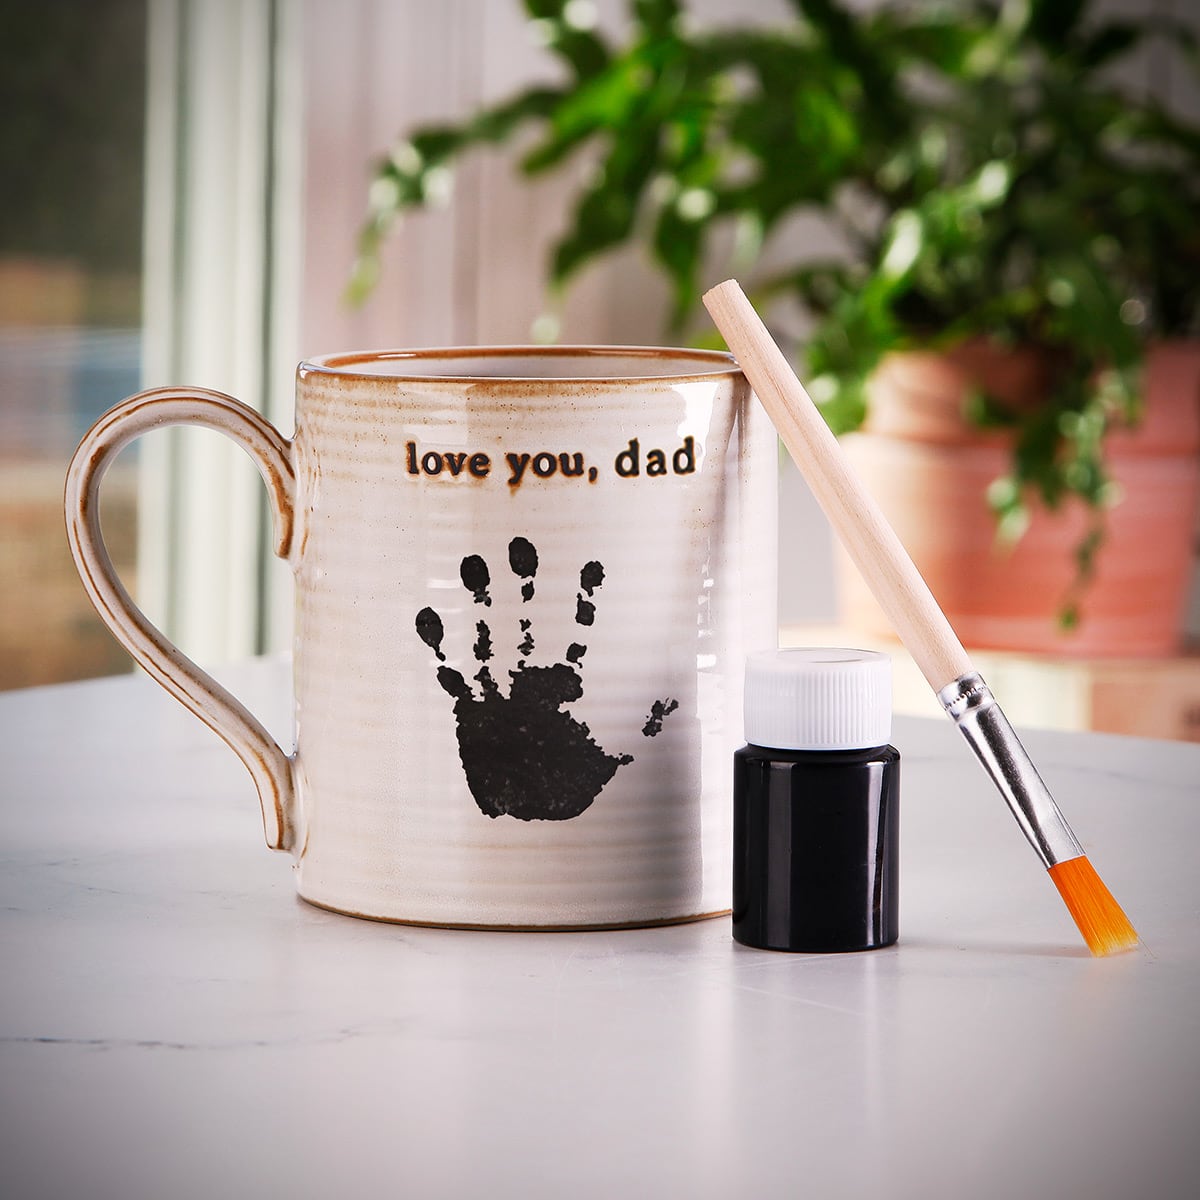 DIY Baby Handprint Mug Kit - Gift for New Dad